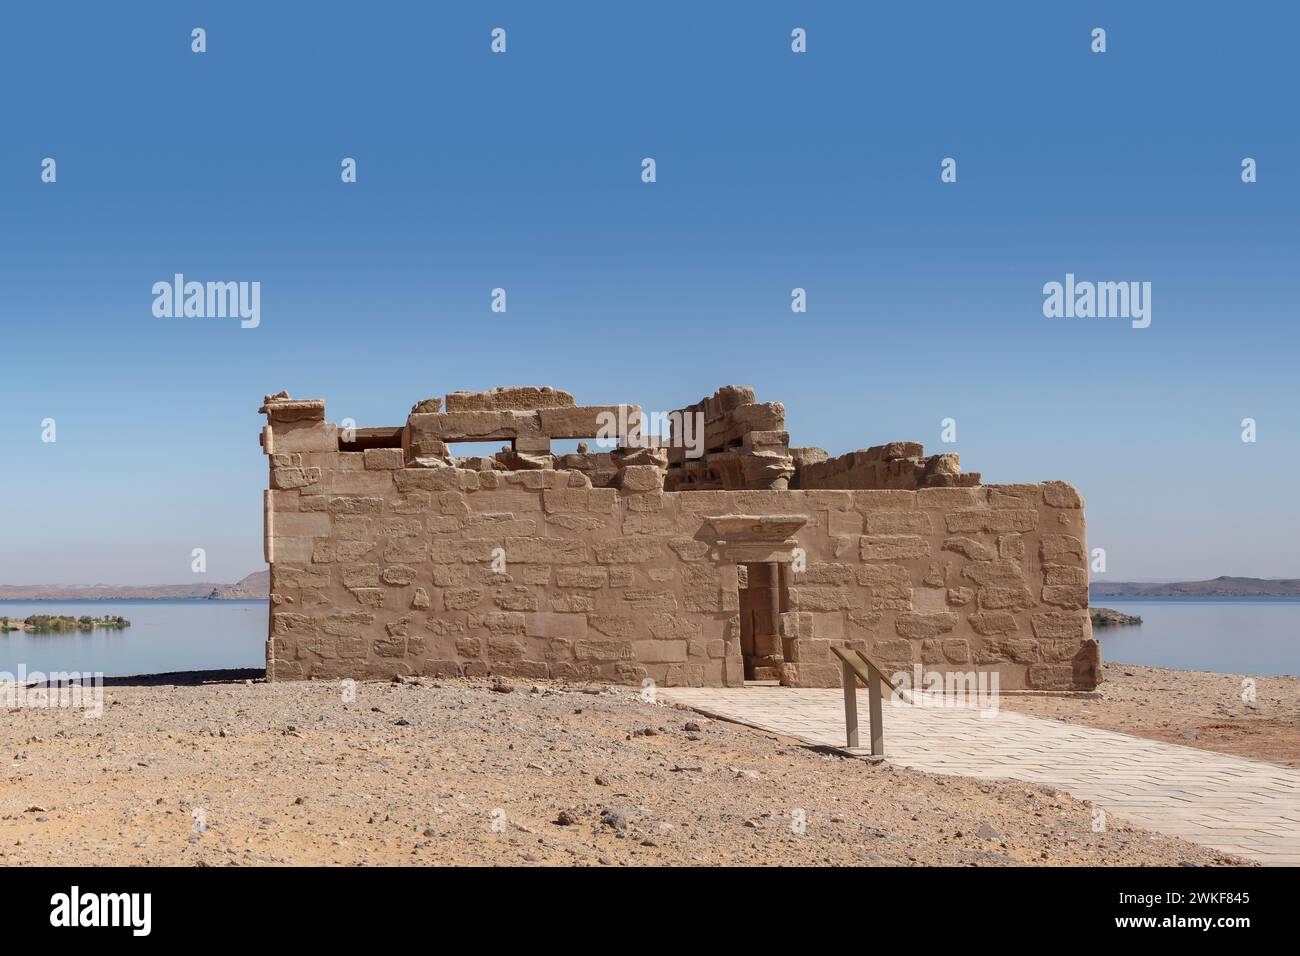 The Temple of Maharraqa on Lake Nasser, Egypt Stock Photo